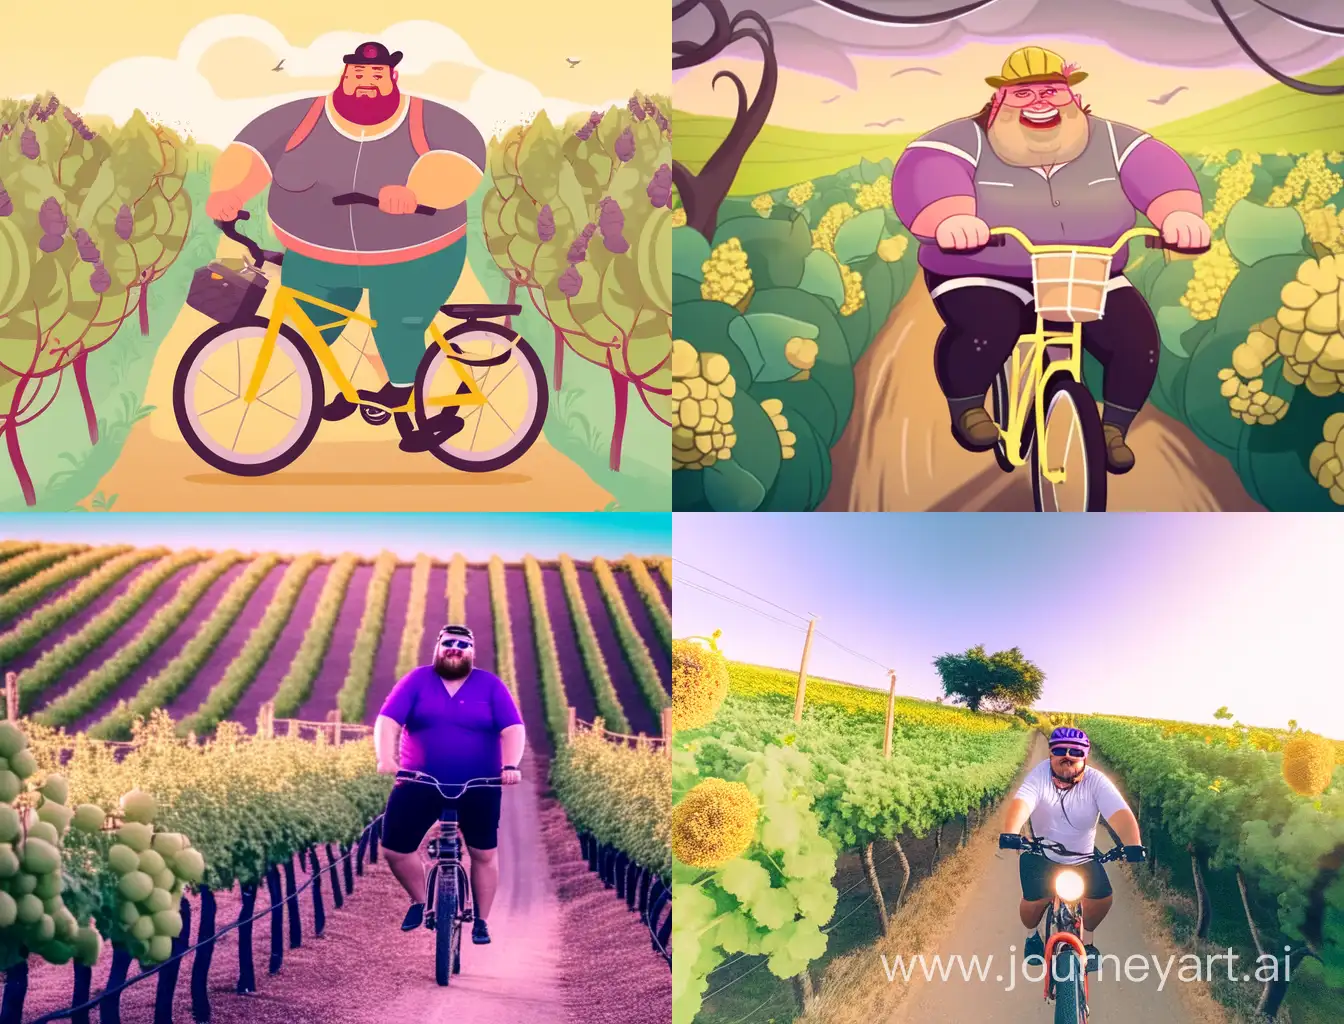 Joyful-Cyclist-Riding-HandsFree-Through-Vineyard